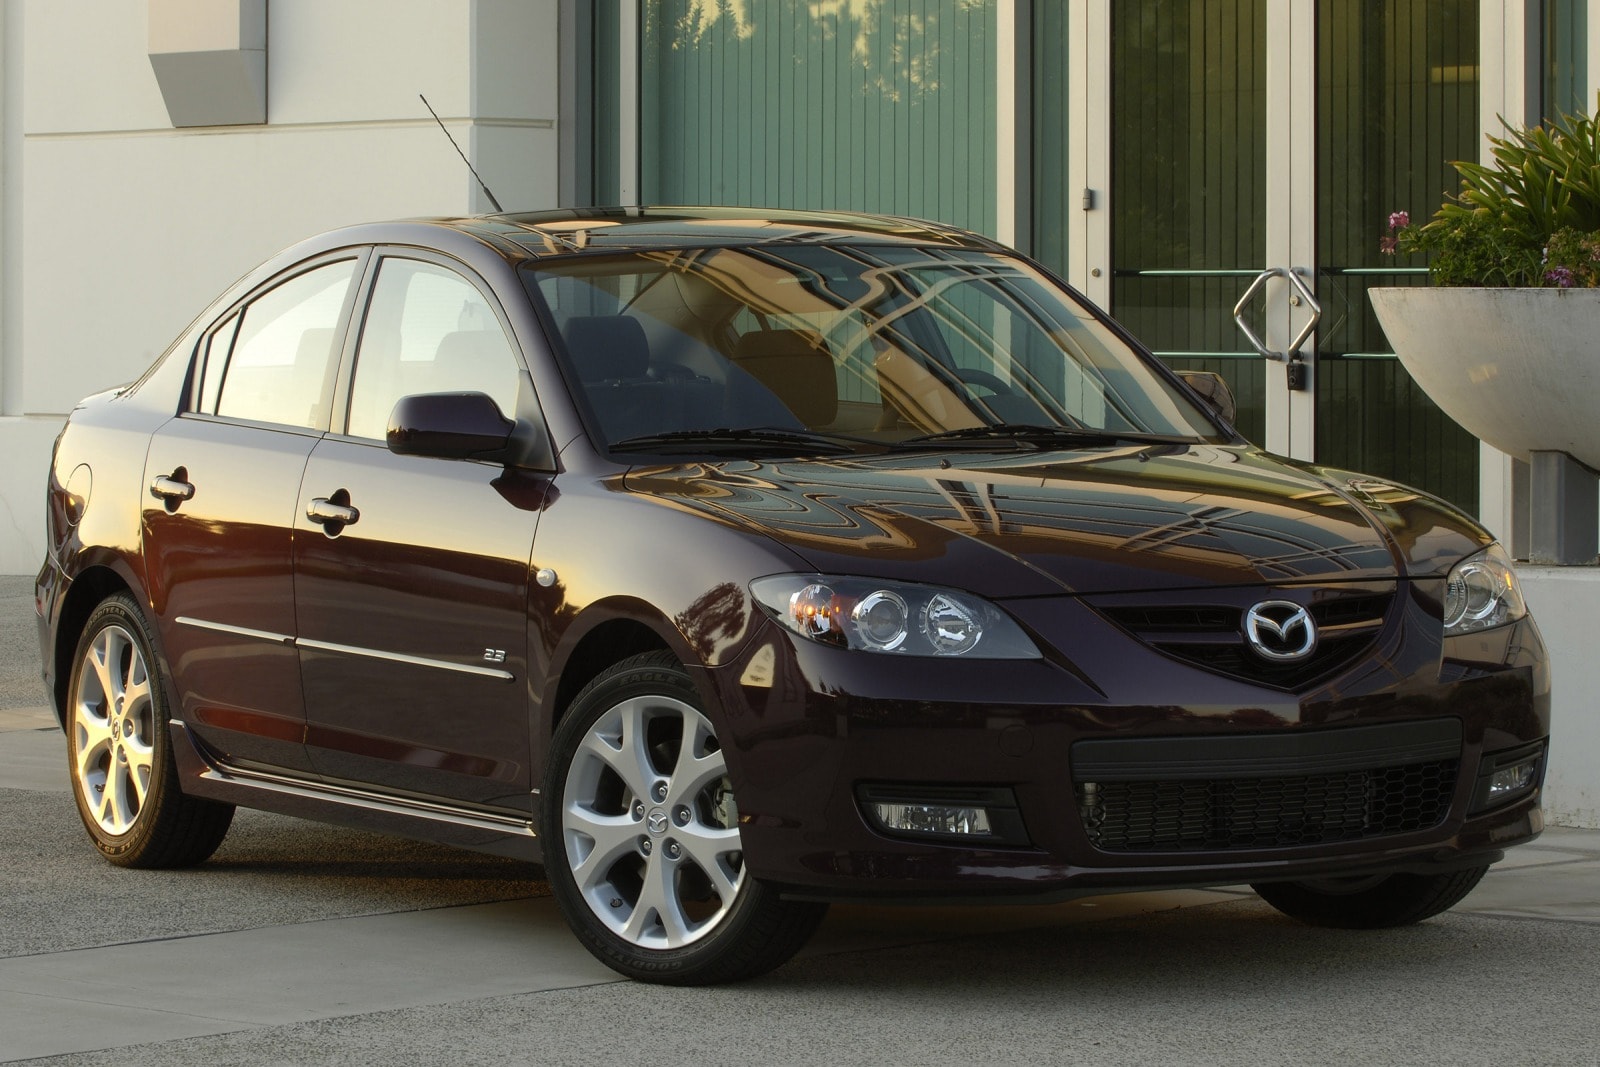 2008 Mazda 3 Review & Ratings | Edmunds